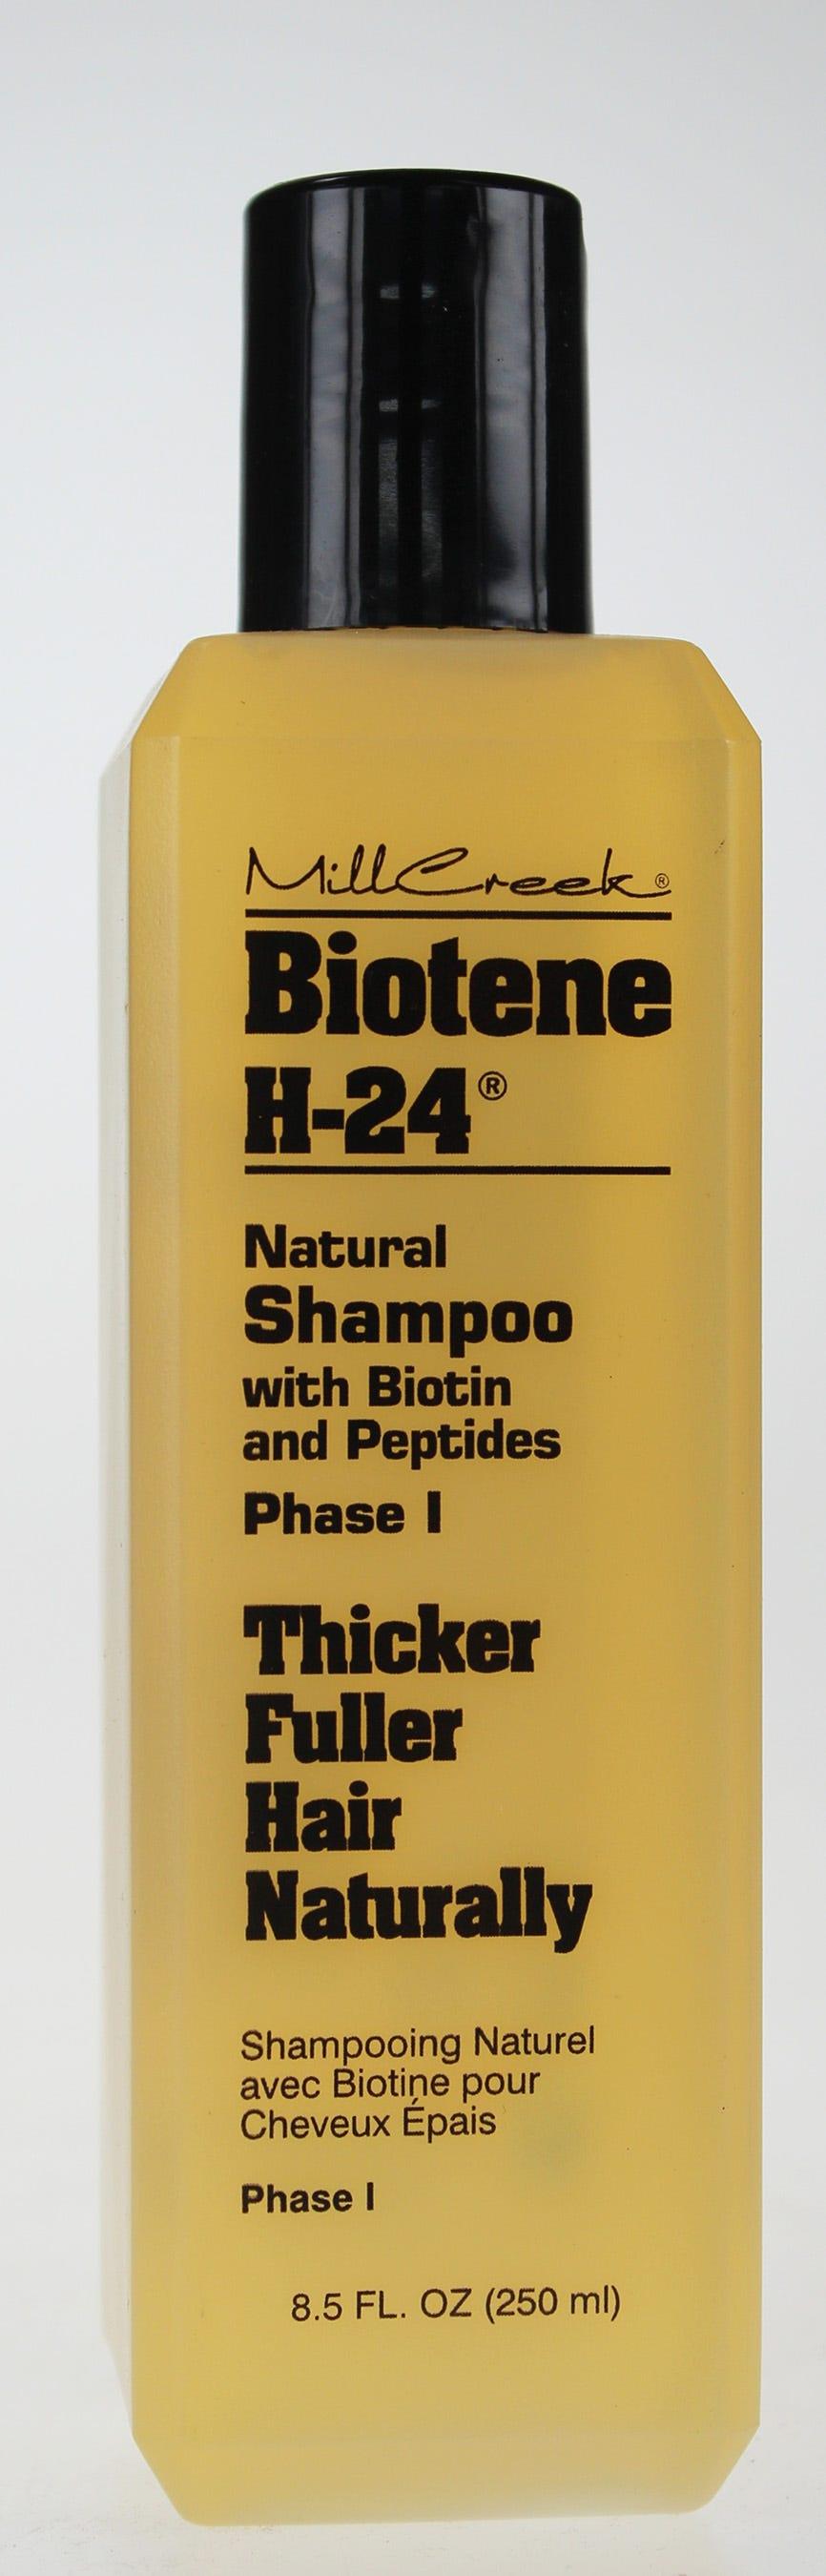 Mill Creek Shampoo Biotene H-24, 250ml  Online